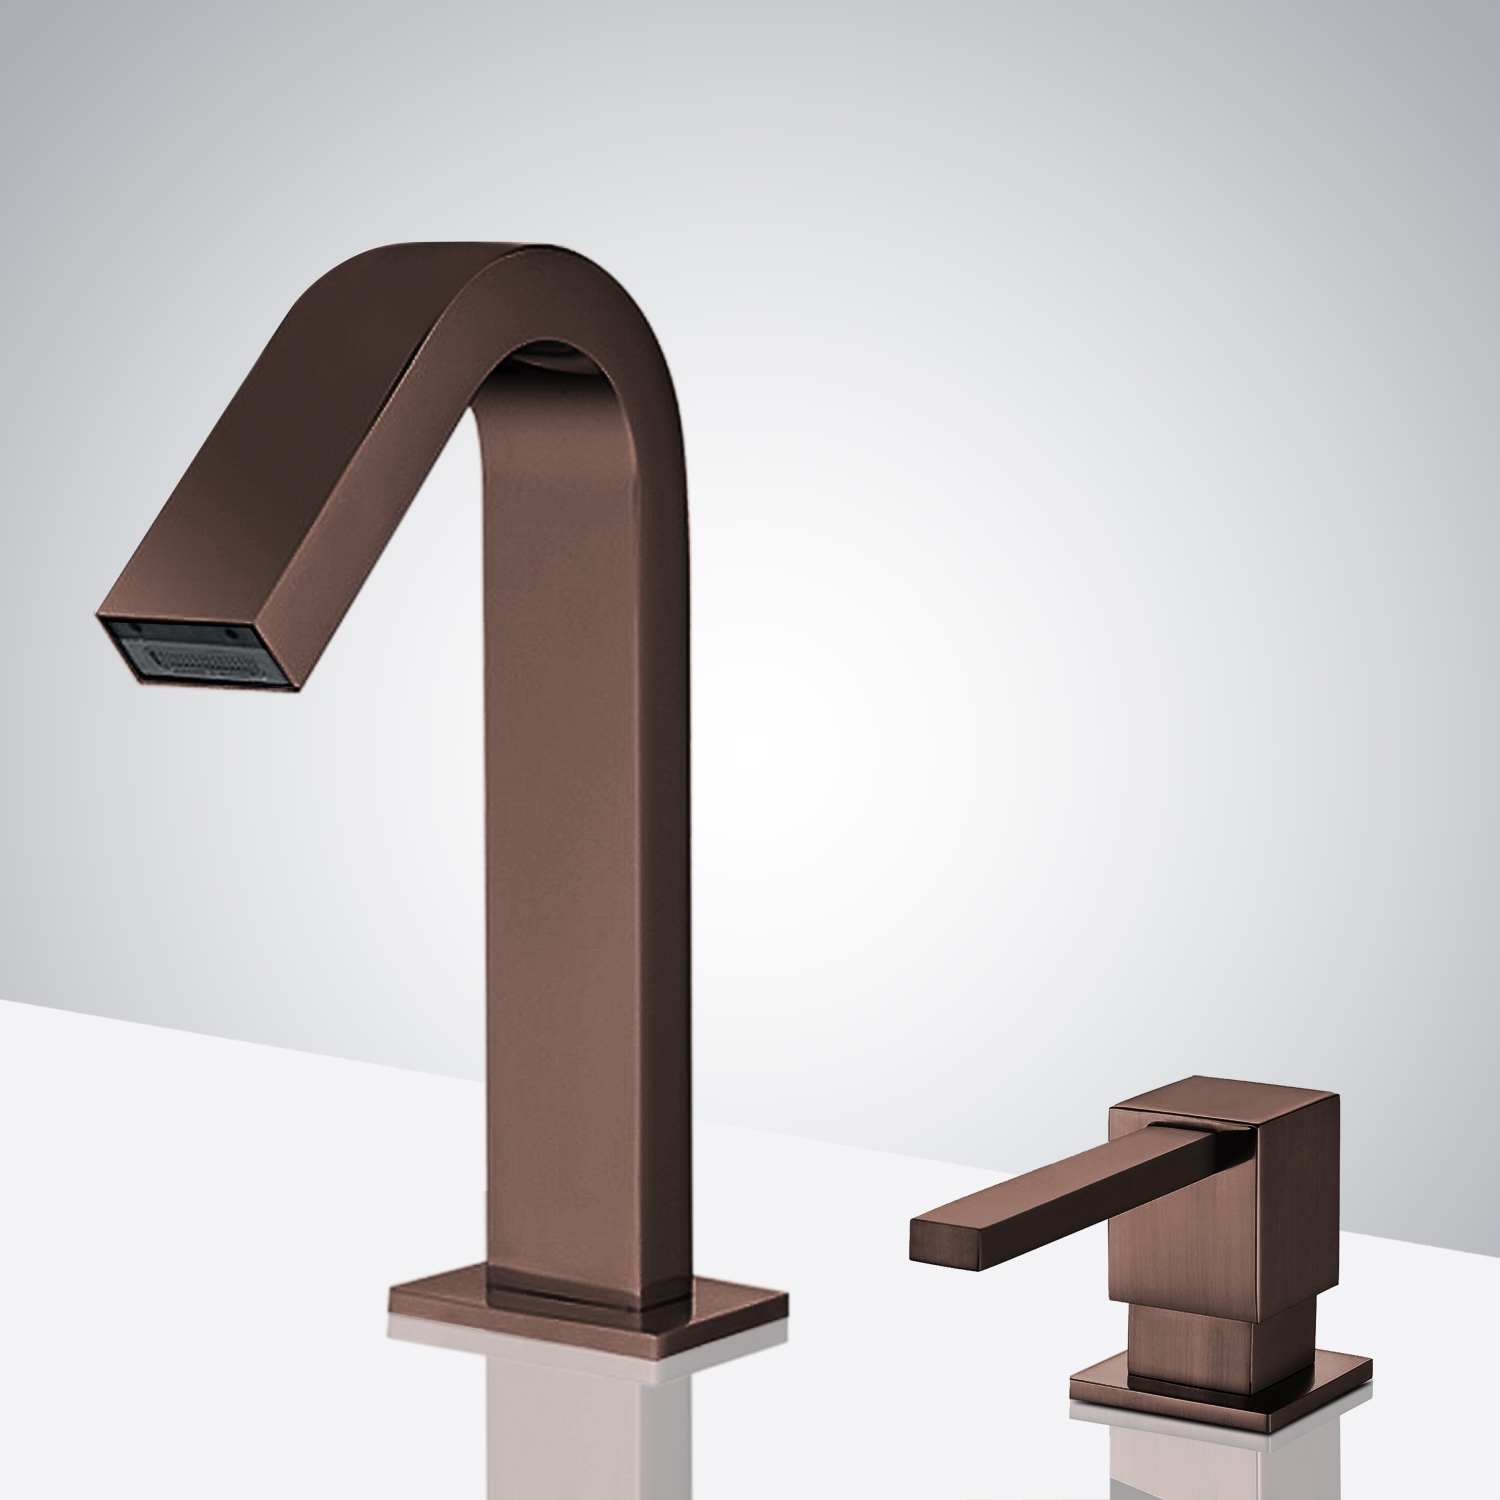 Fontana Commercial Light Oil Rubbed Bronze Touch less Automatic Sensor Faucet & Manual Soap Dispenser